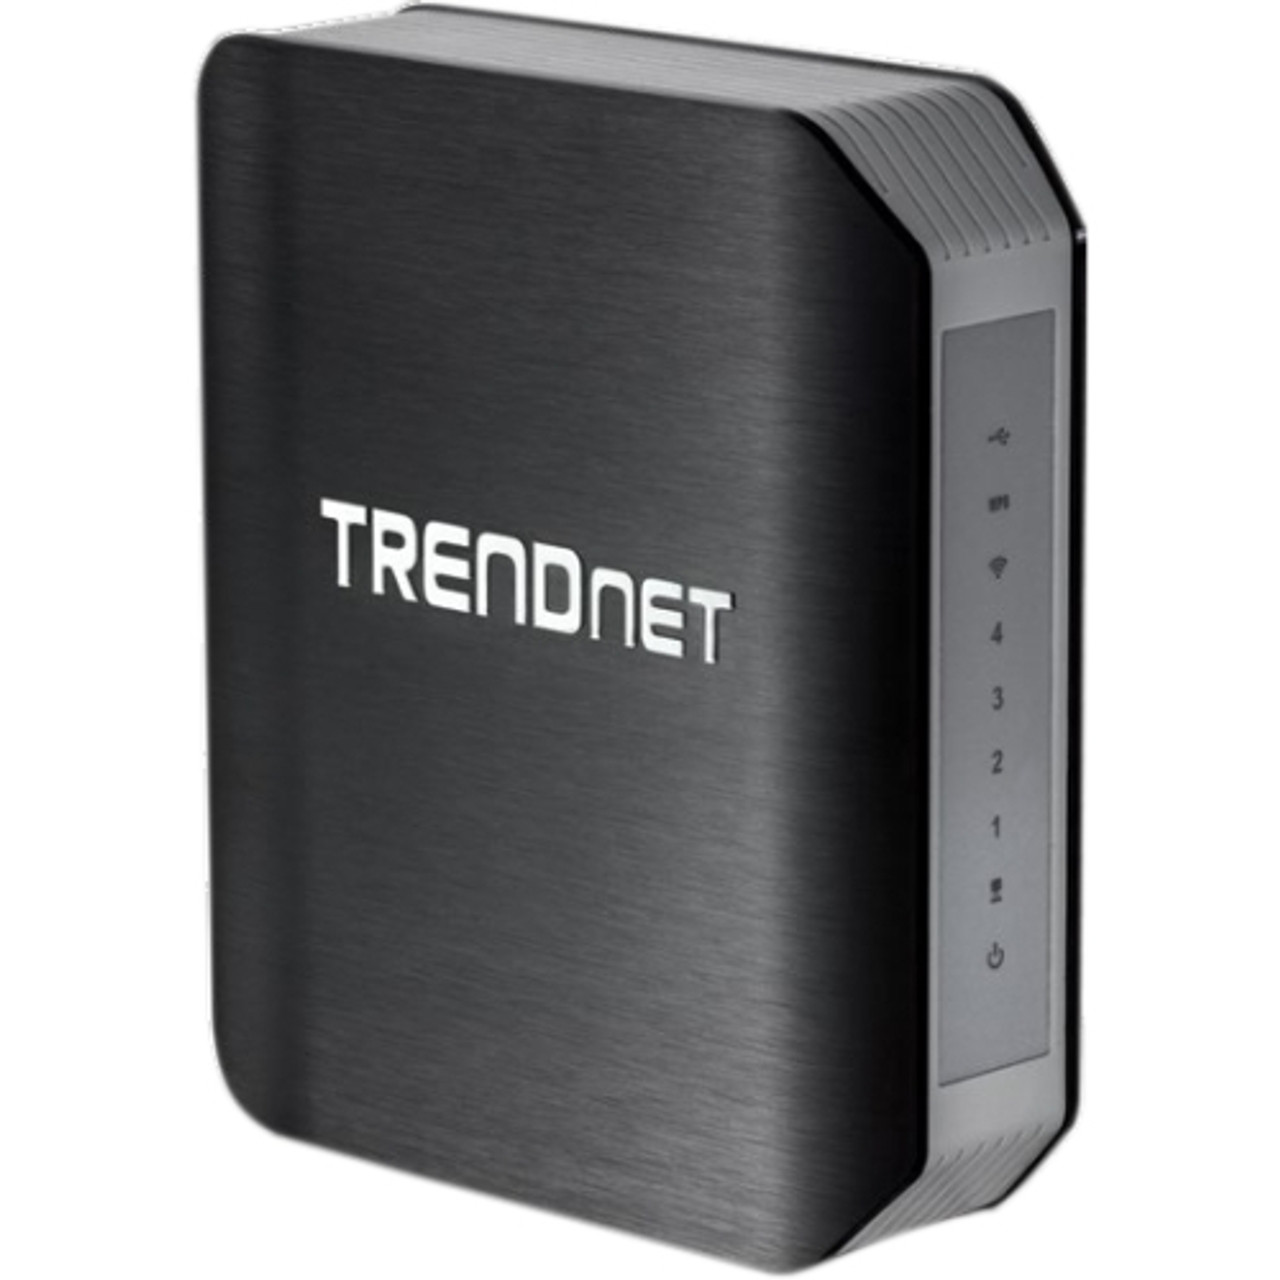 TEW-811DRU TRENDnet IEEE 802.11ac Wireless Router (Refurbished)